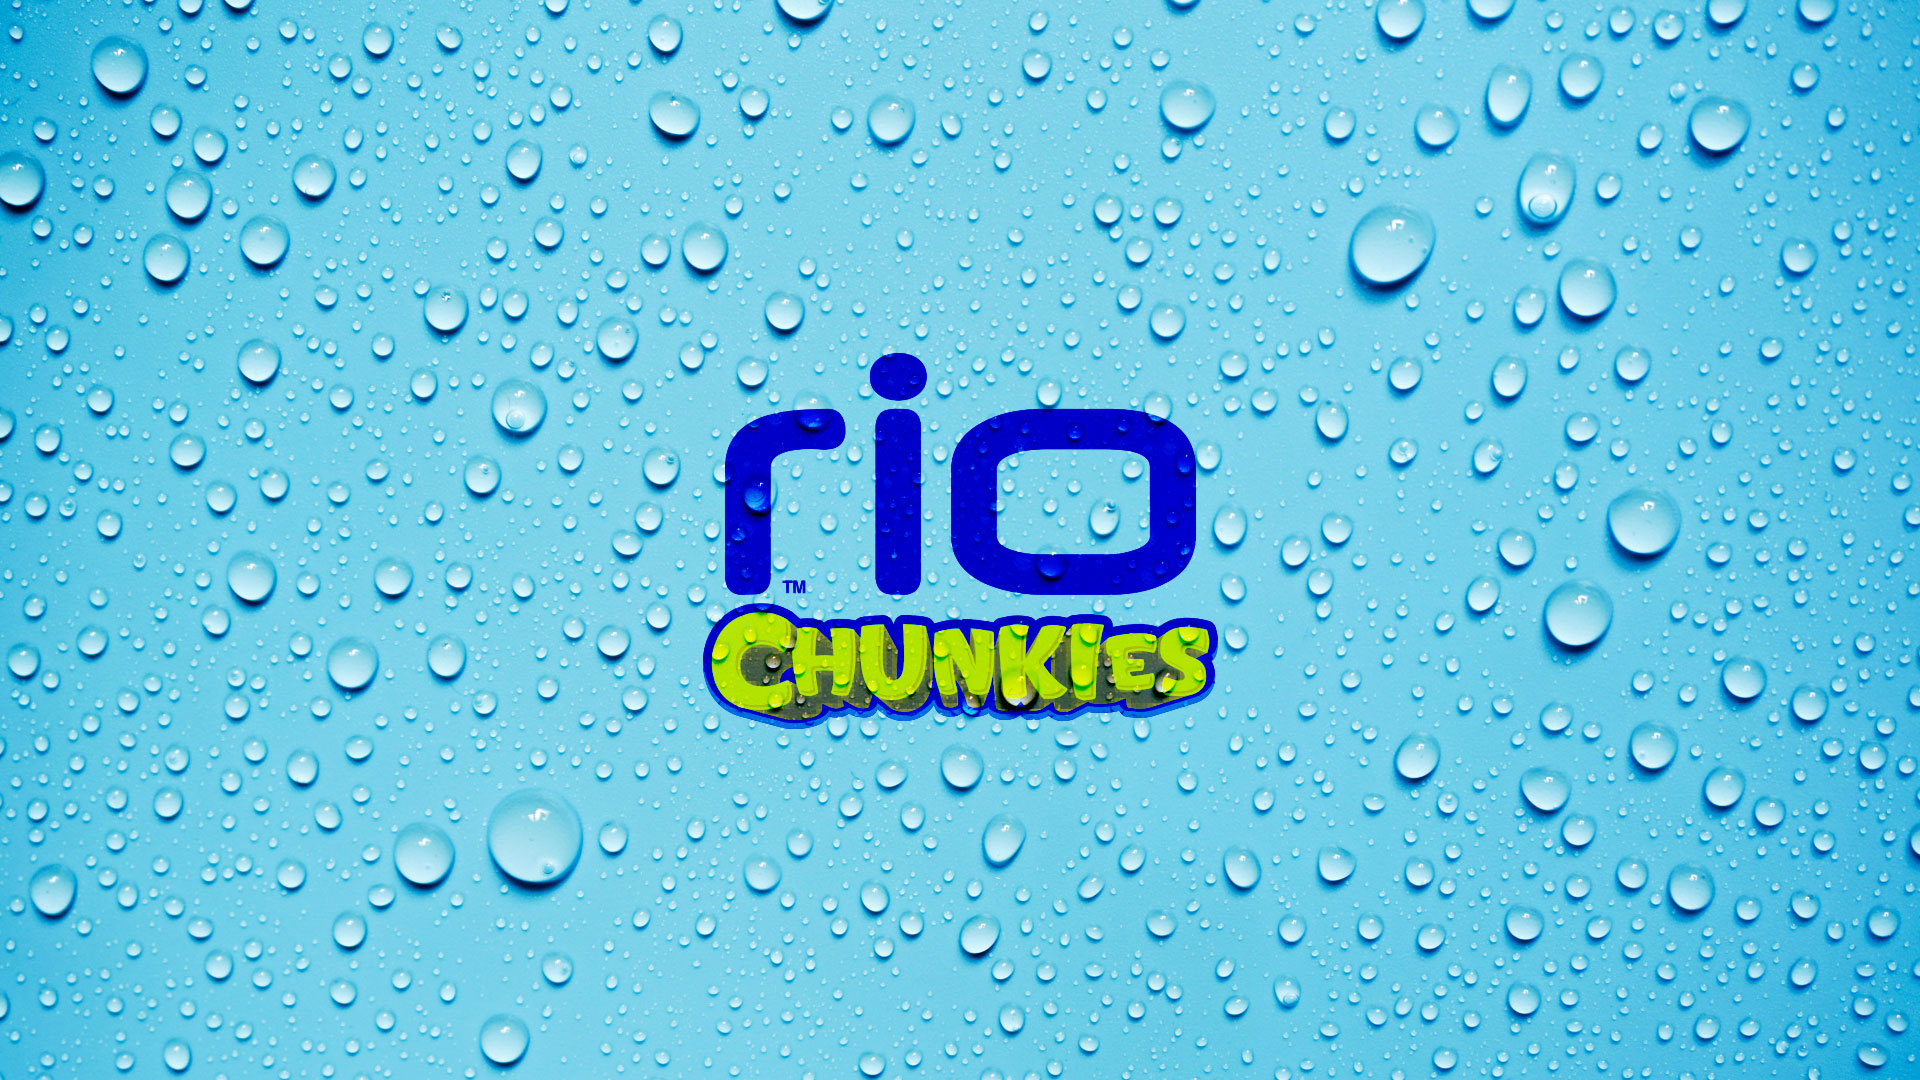 Rio-Chunkies